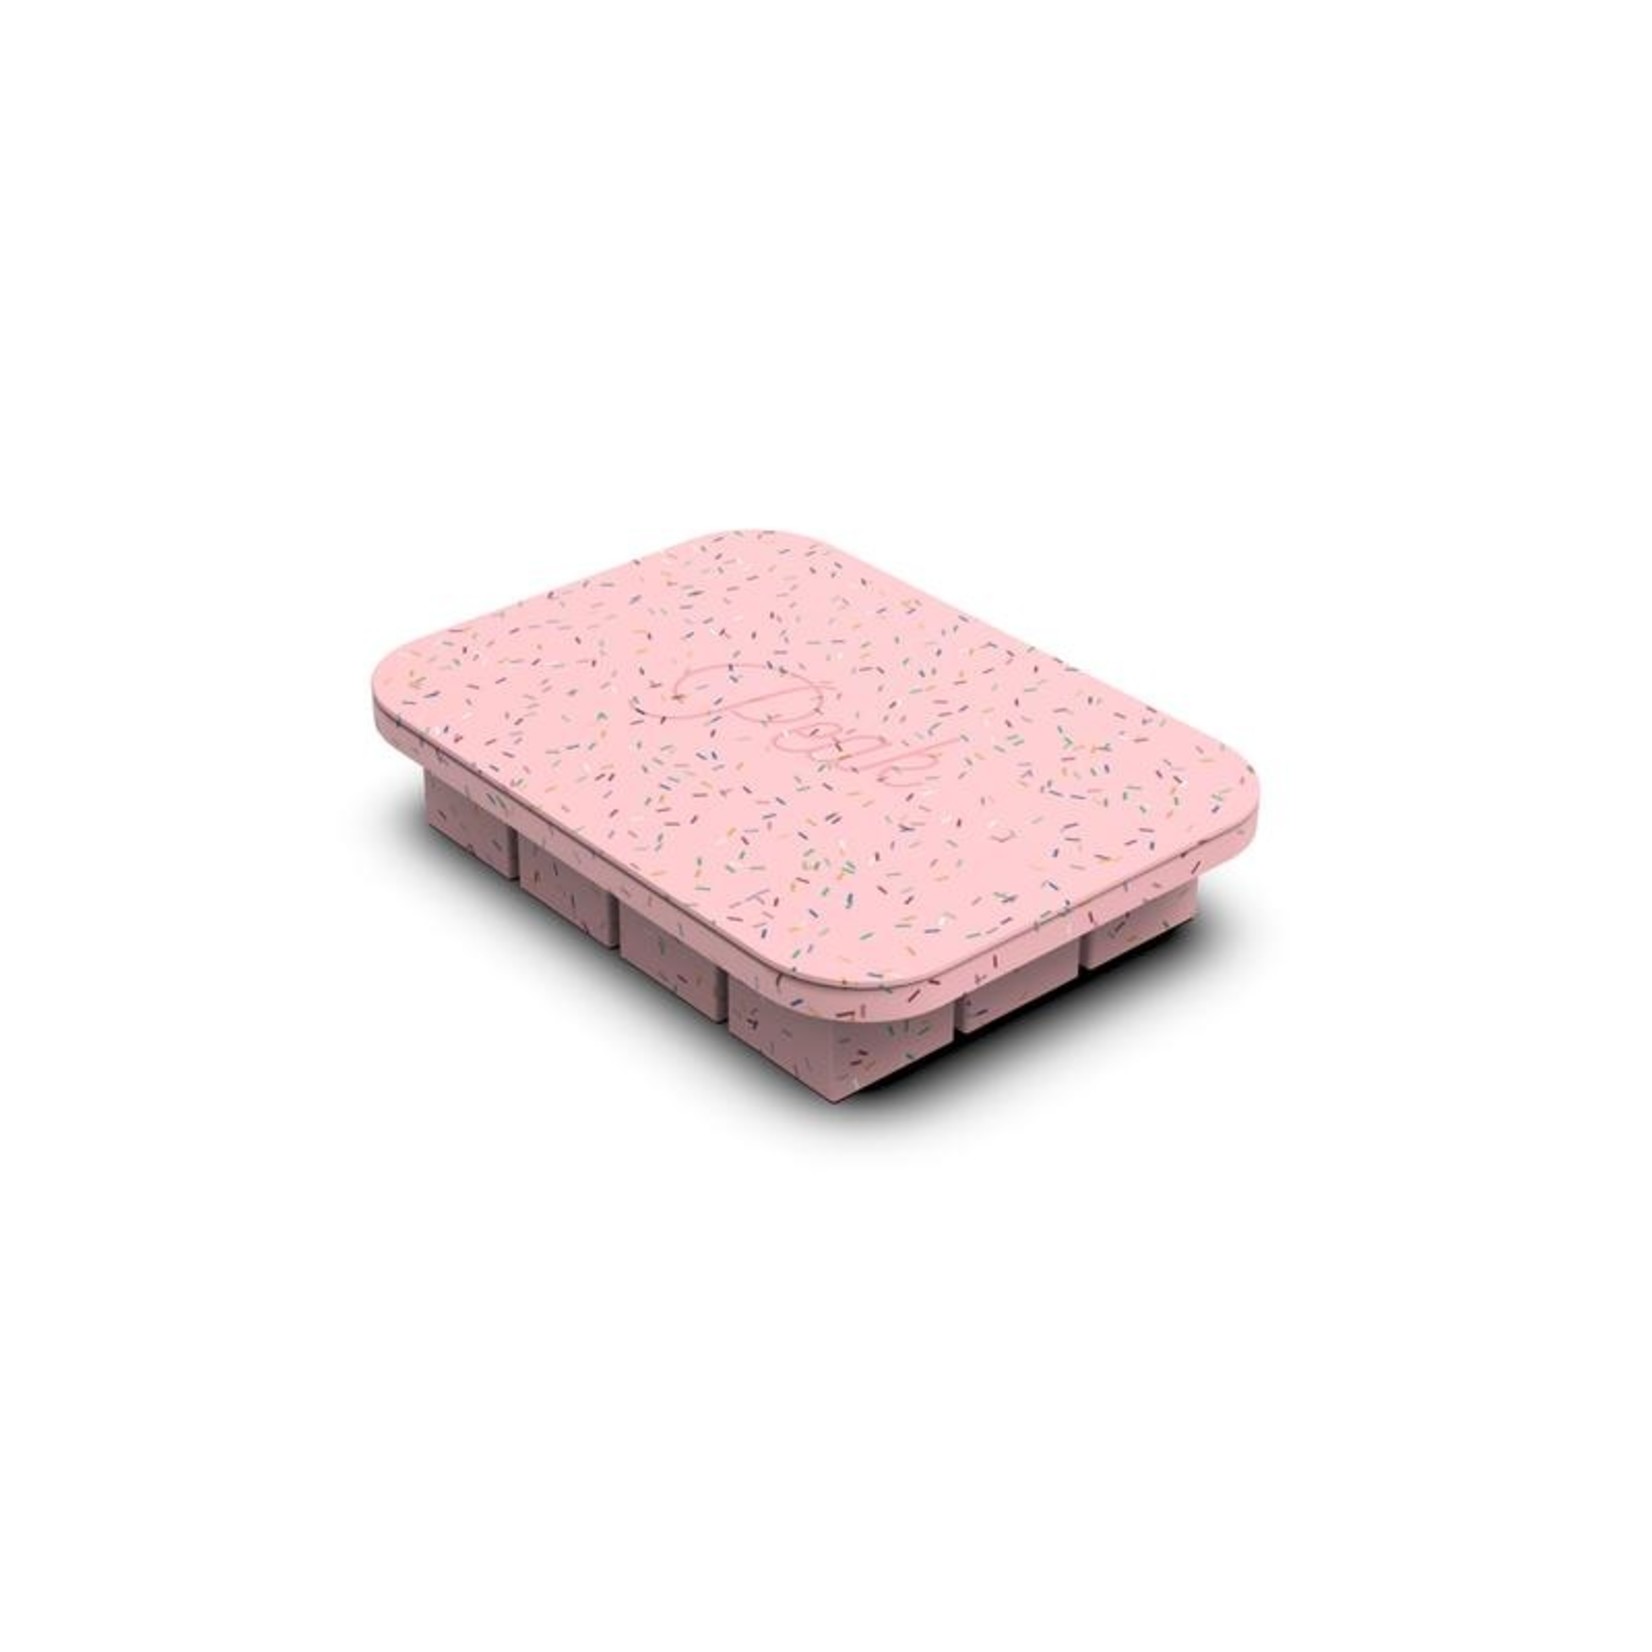 https://cdn.shoplightspeed.com/shops/613246/files/36153113/1652x1652x2/w-p-designs-peak-xl-ice-cube-tray-in-speckled-pink.jpg